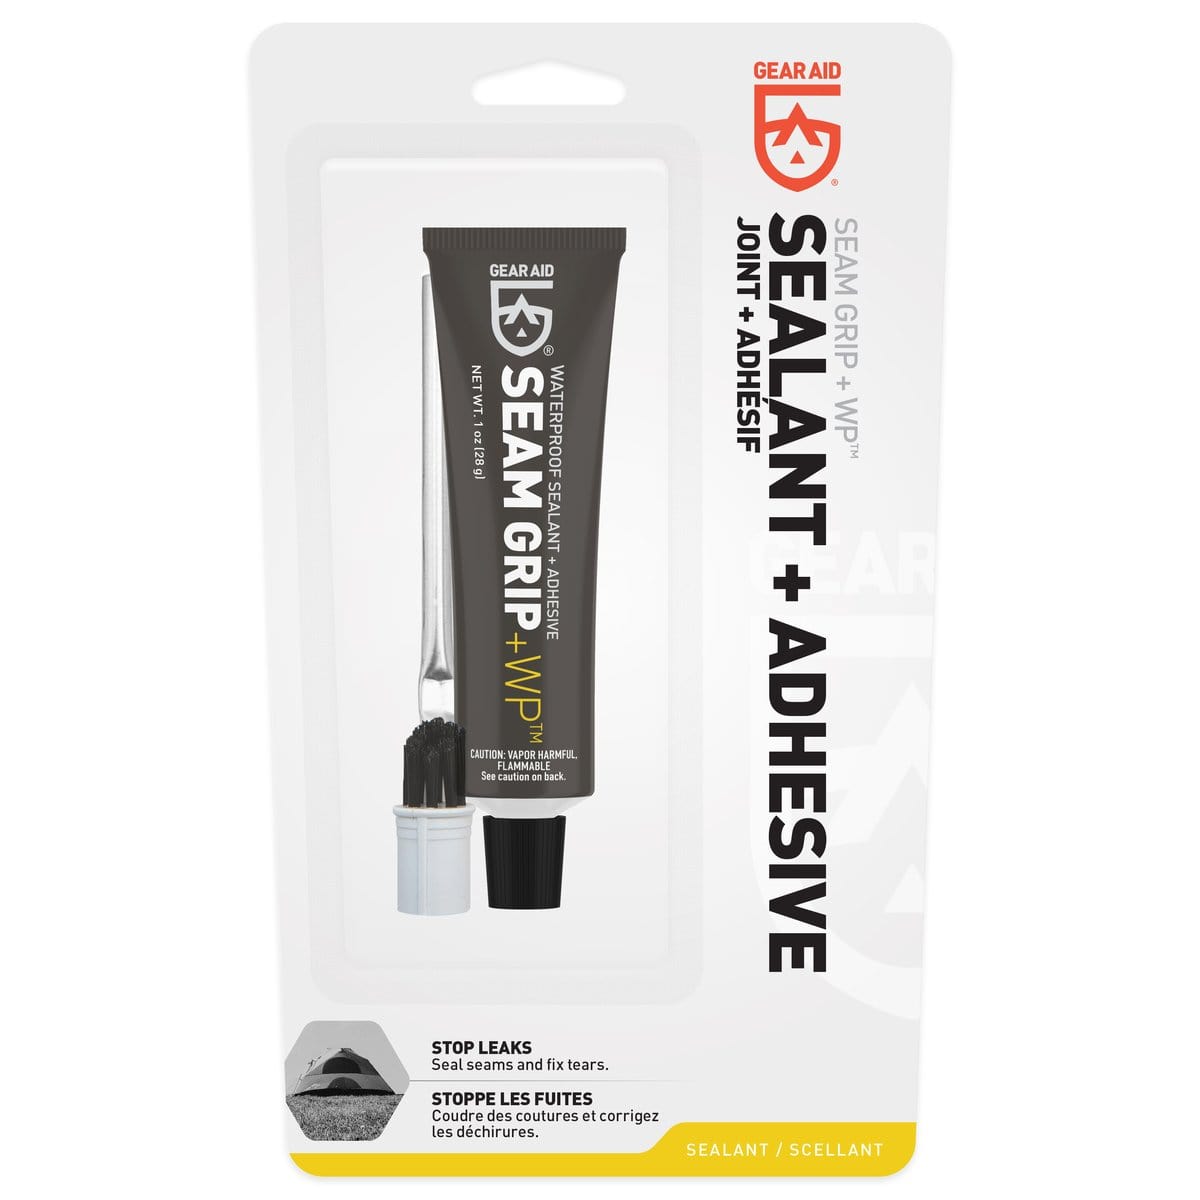 gear-aid Repair Kit Seam Grip WP Waterproof Sealant and Adhesive MCN10001